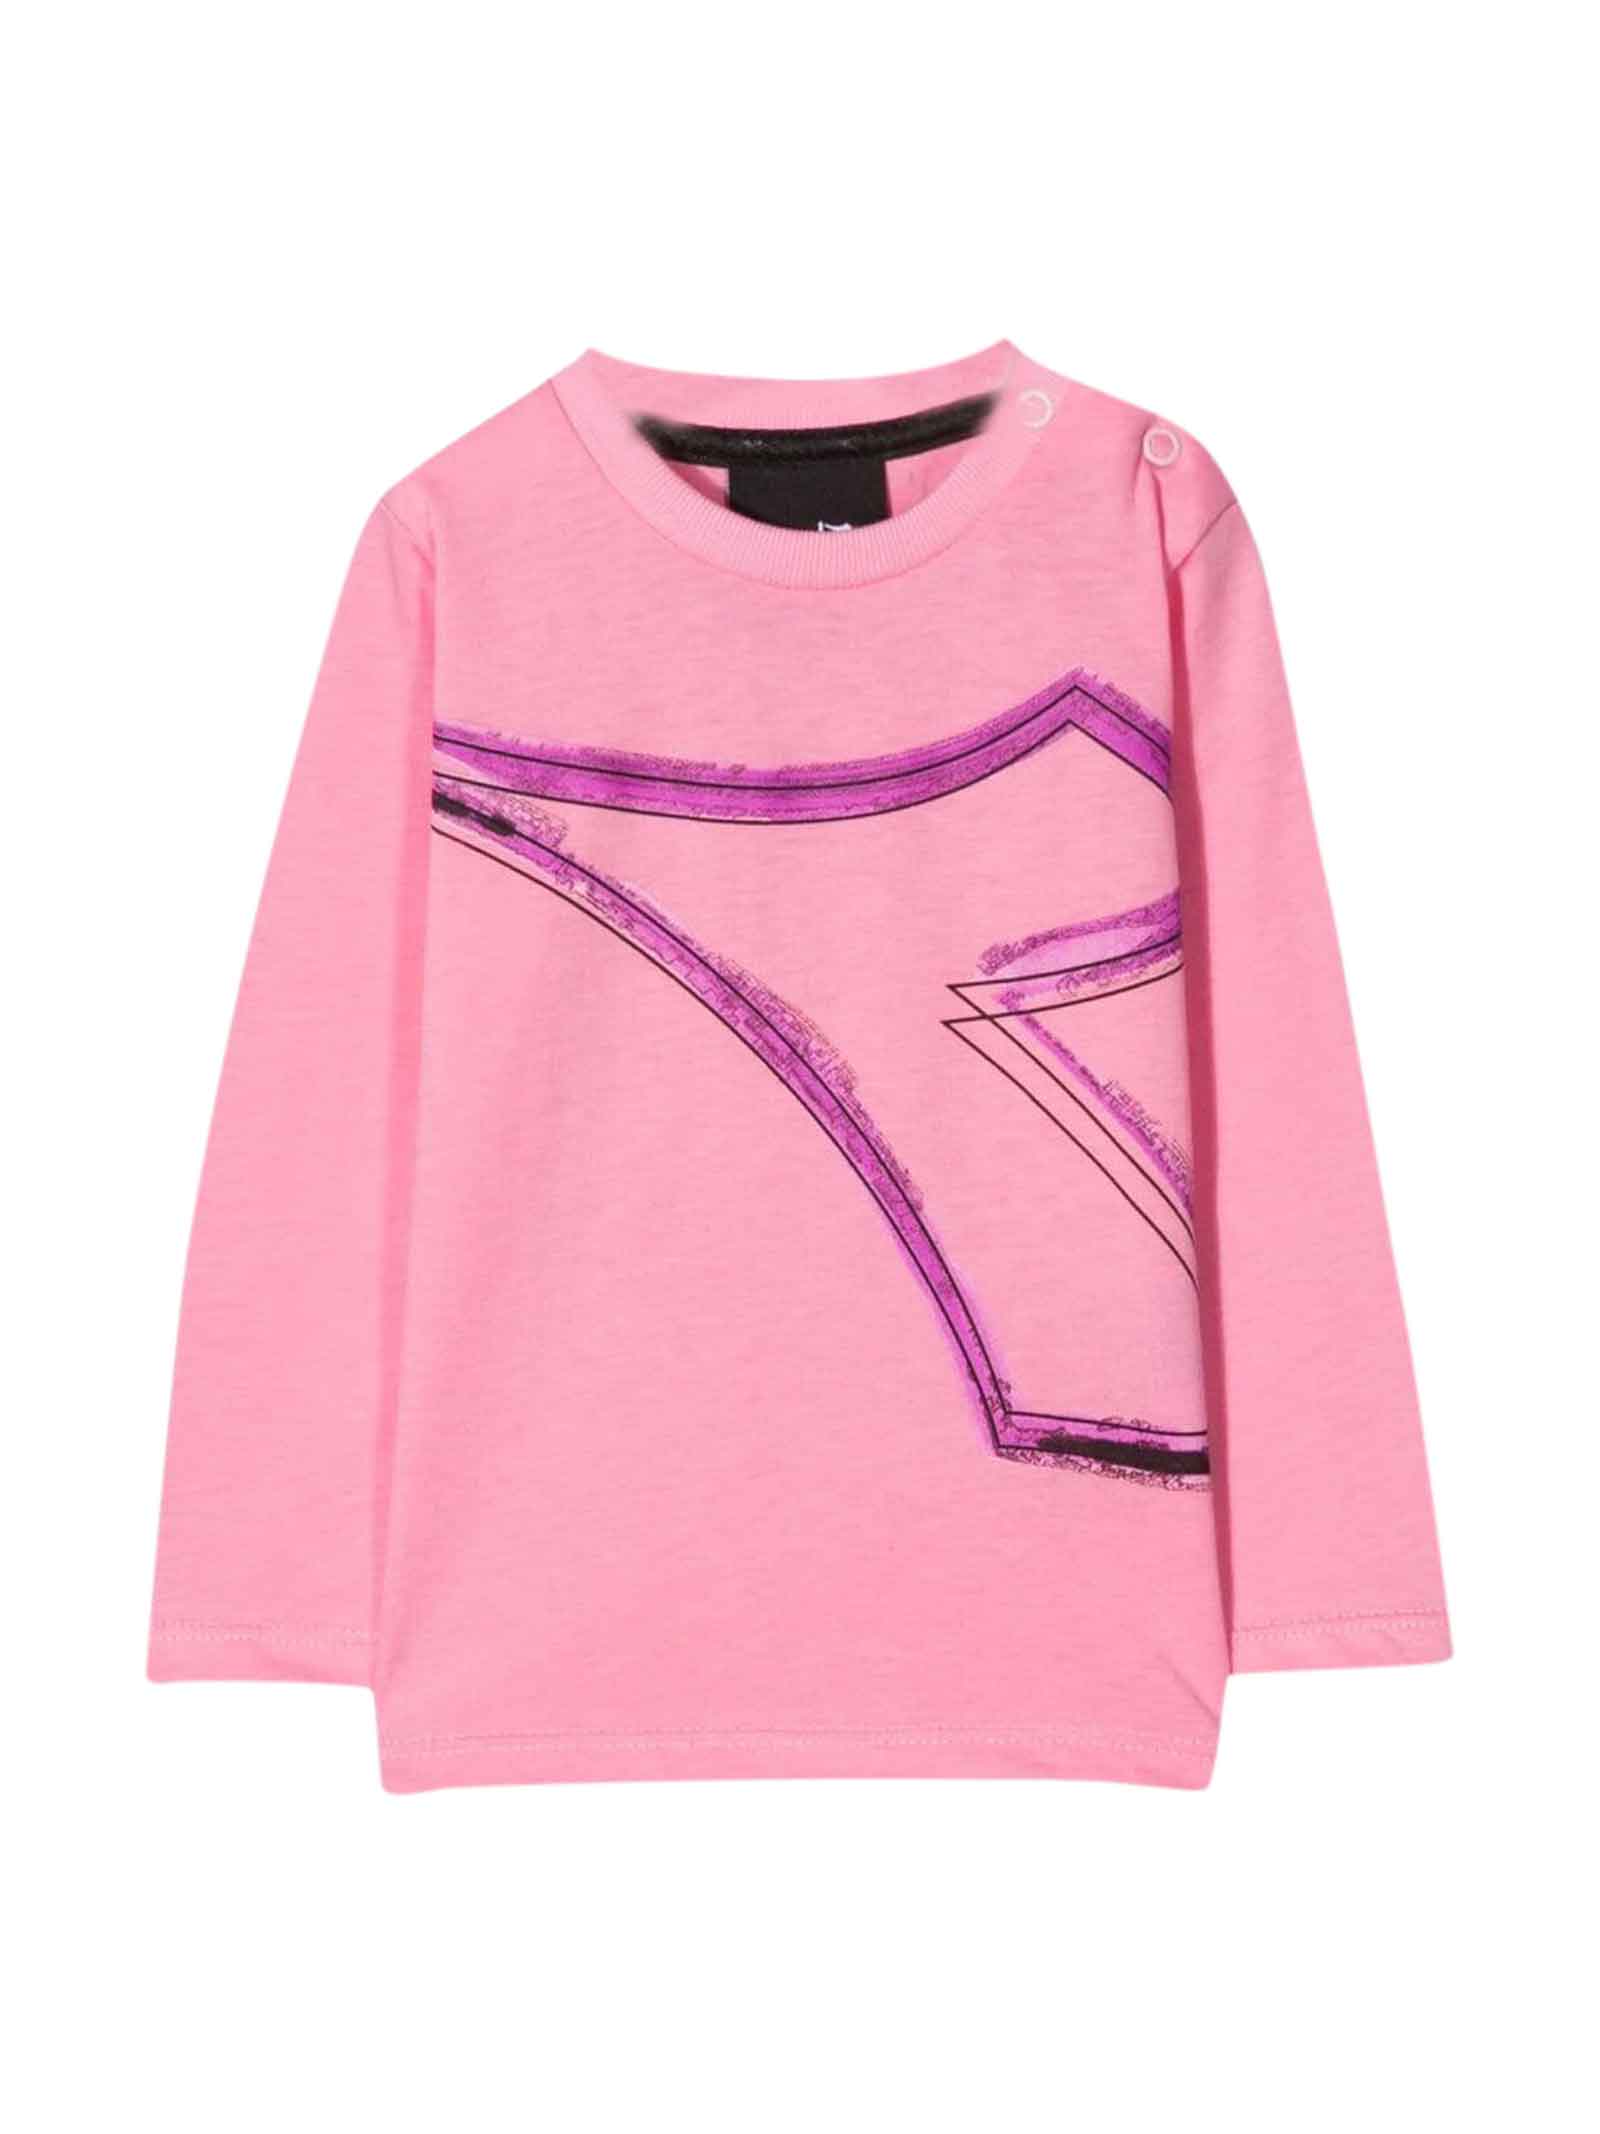 Diadora Girl Pink Sweatshirt